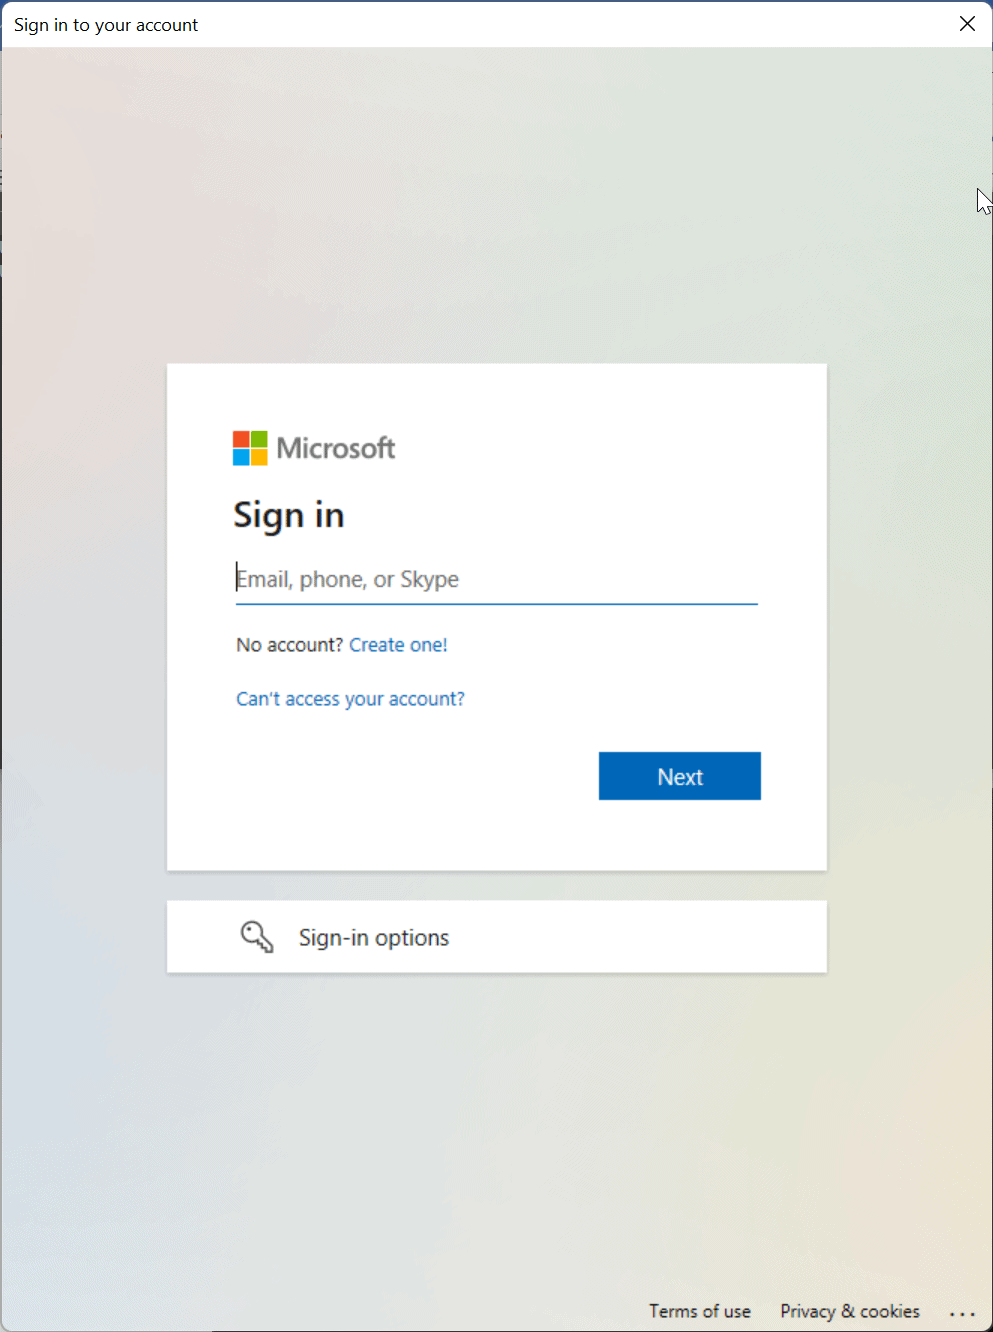 Enter your Microsoft 365 credentials